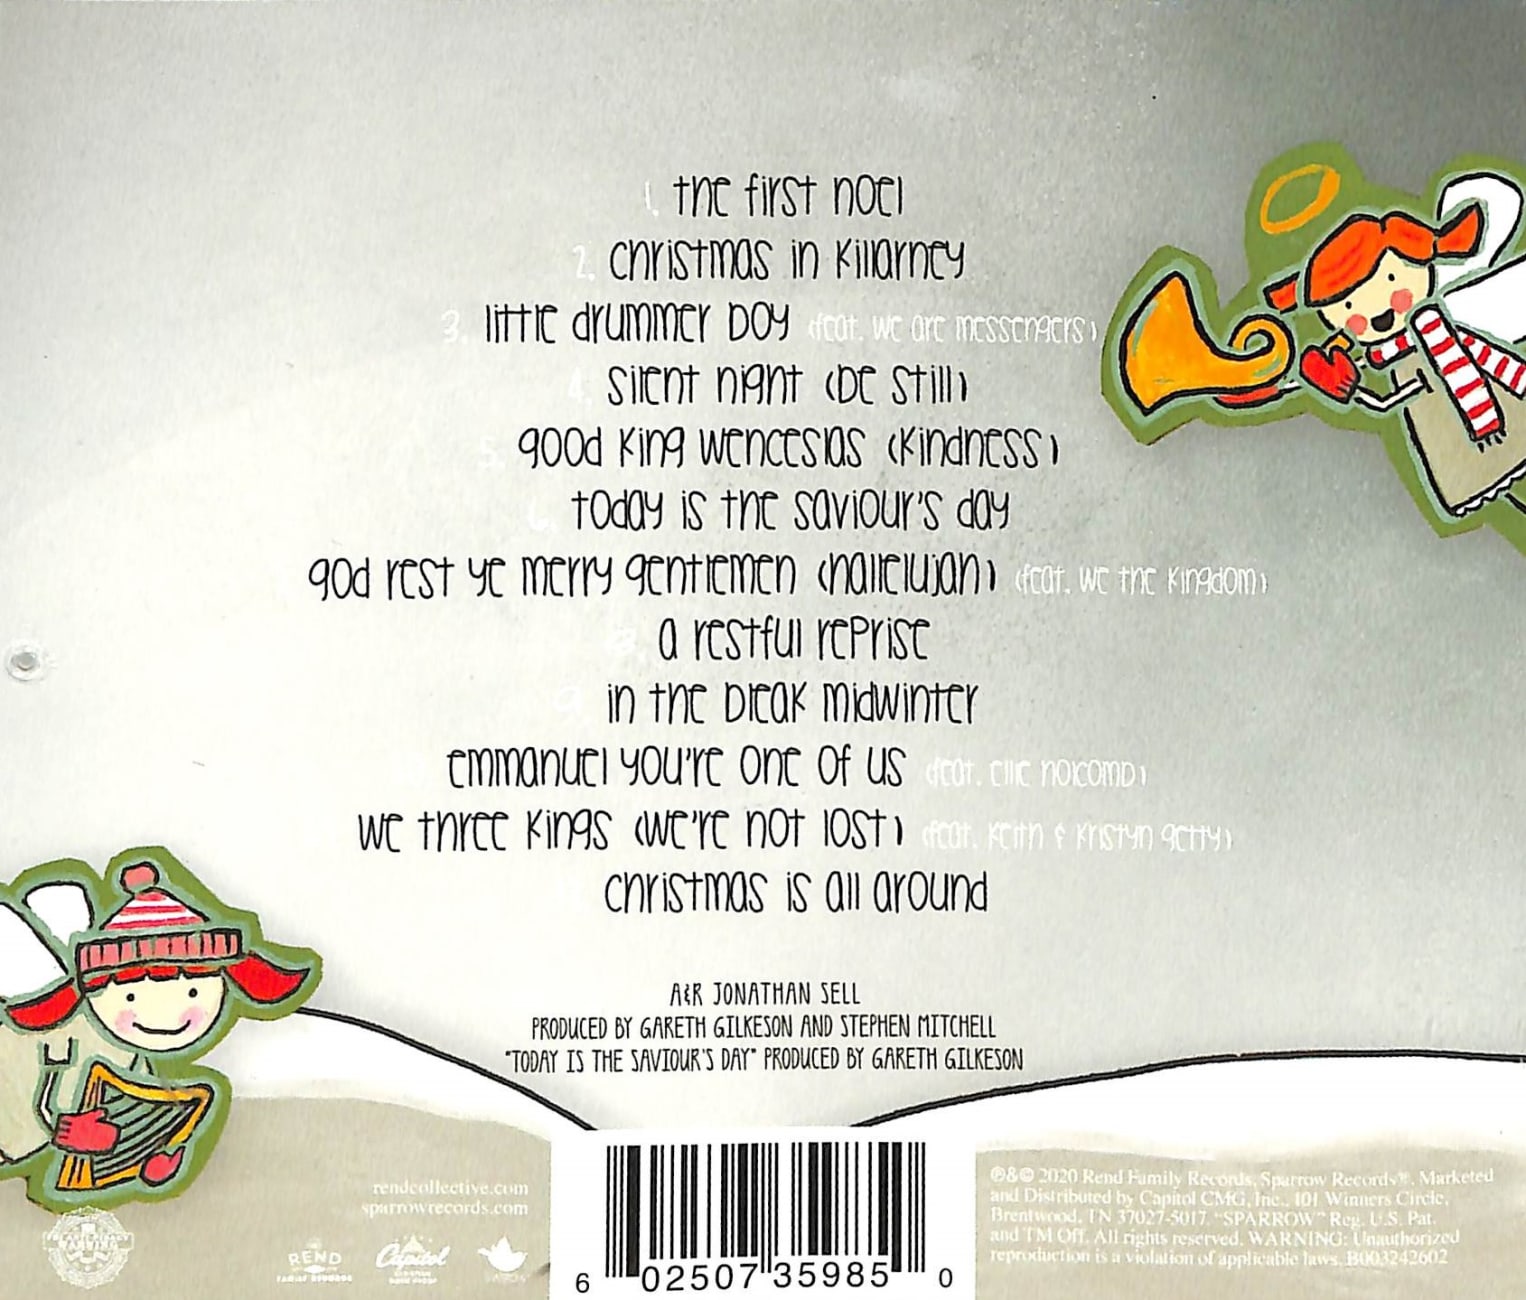 Jolly Irish Christmas Volume 2 Compact Disc